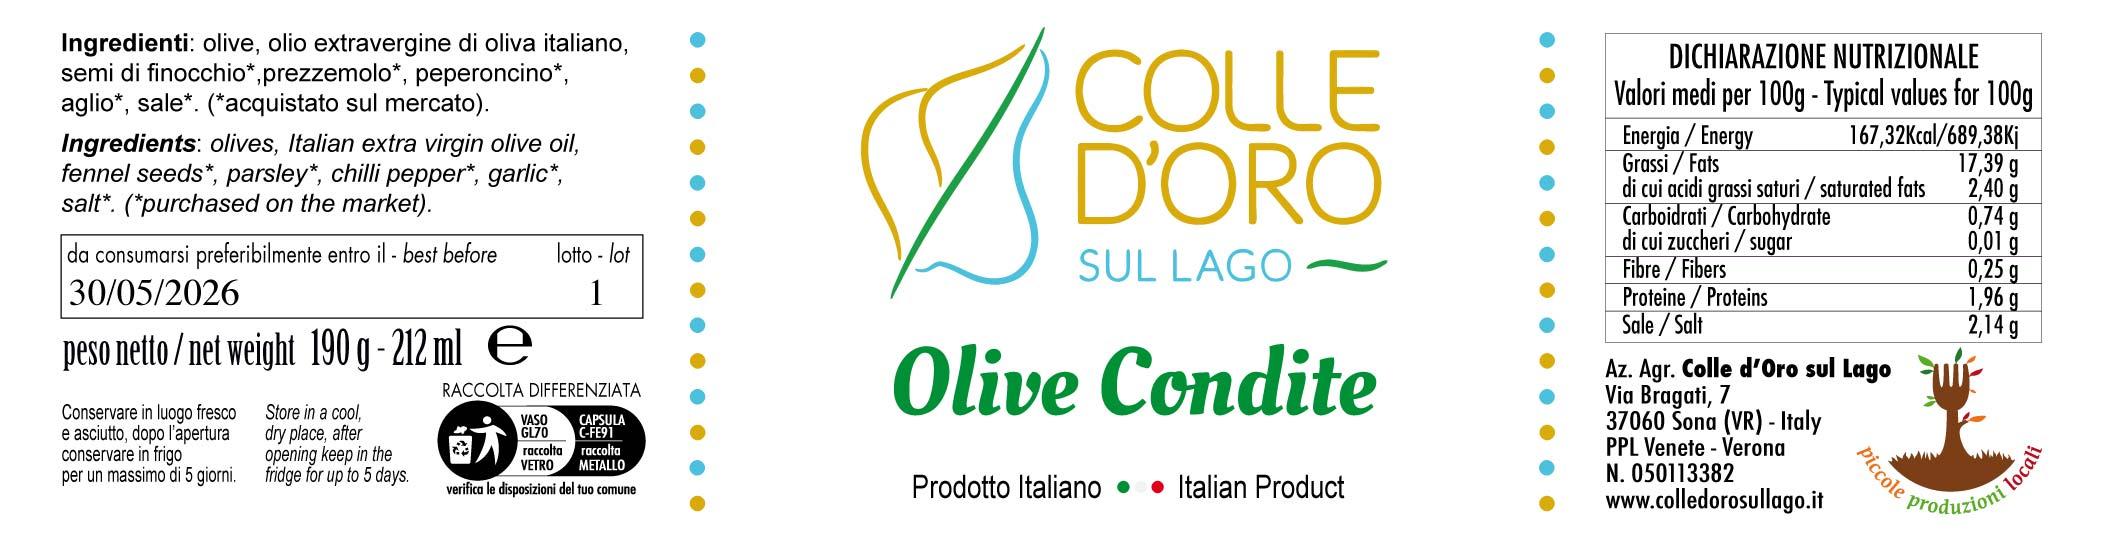 Cod. 18 Olive condite 250 g